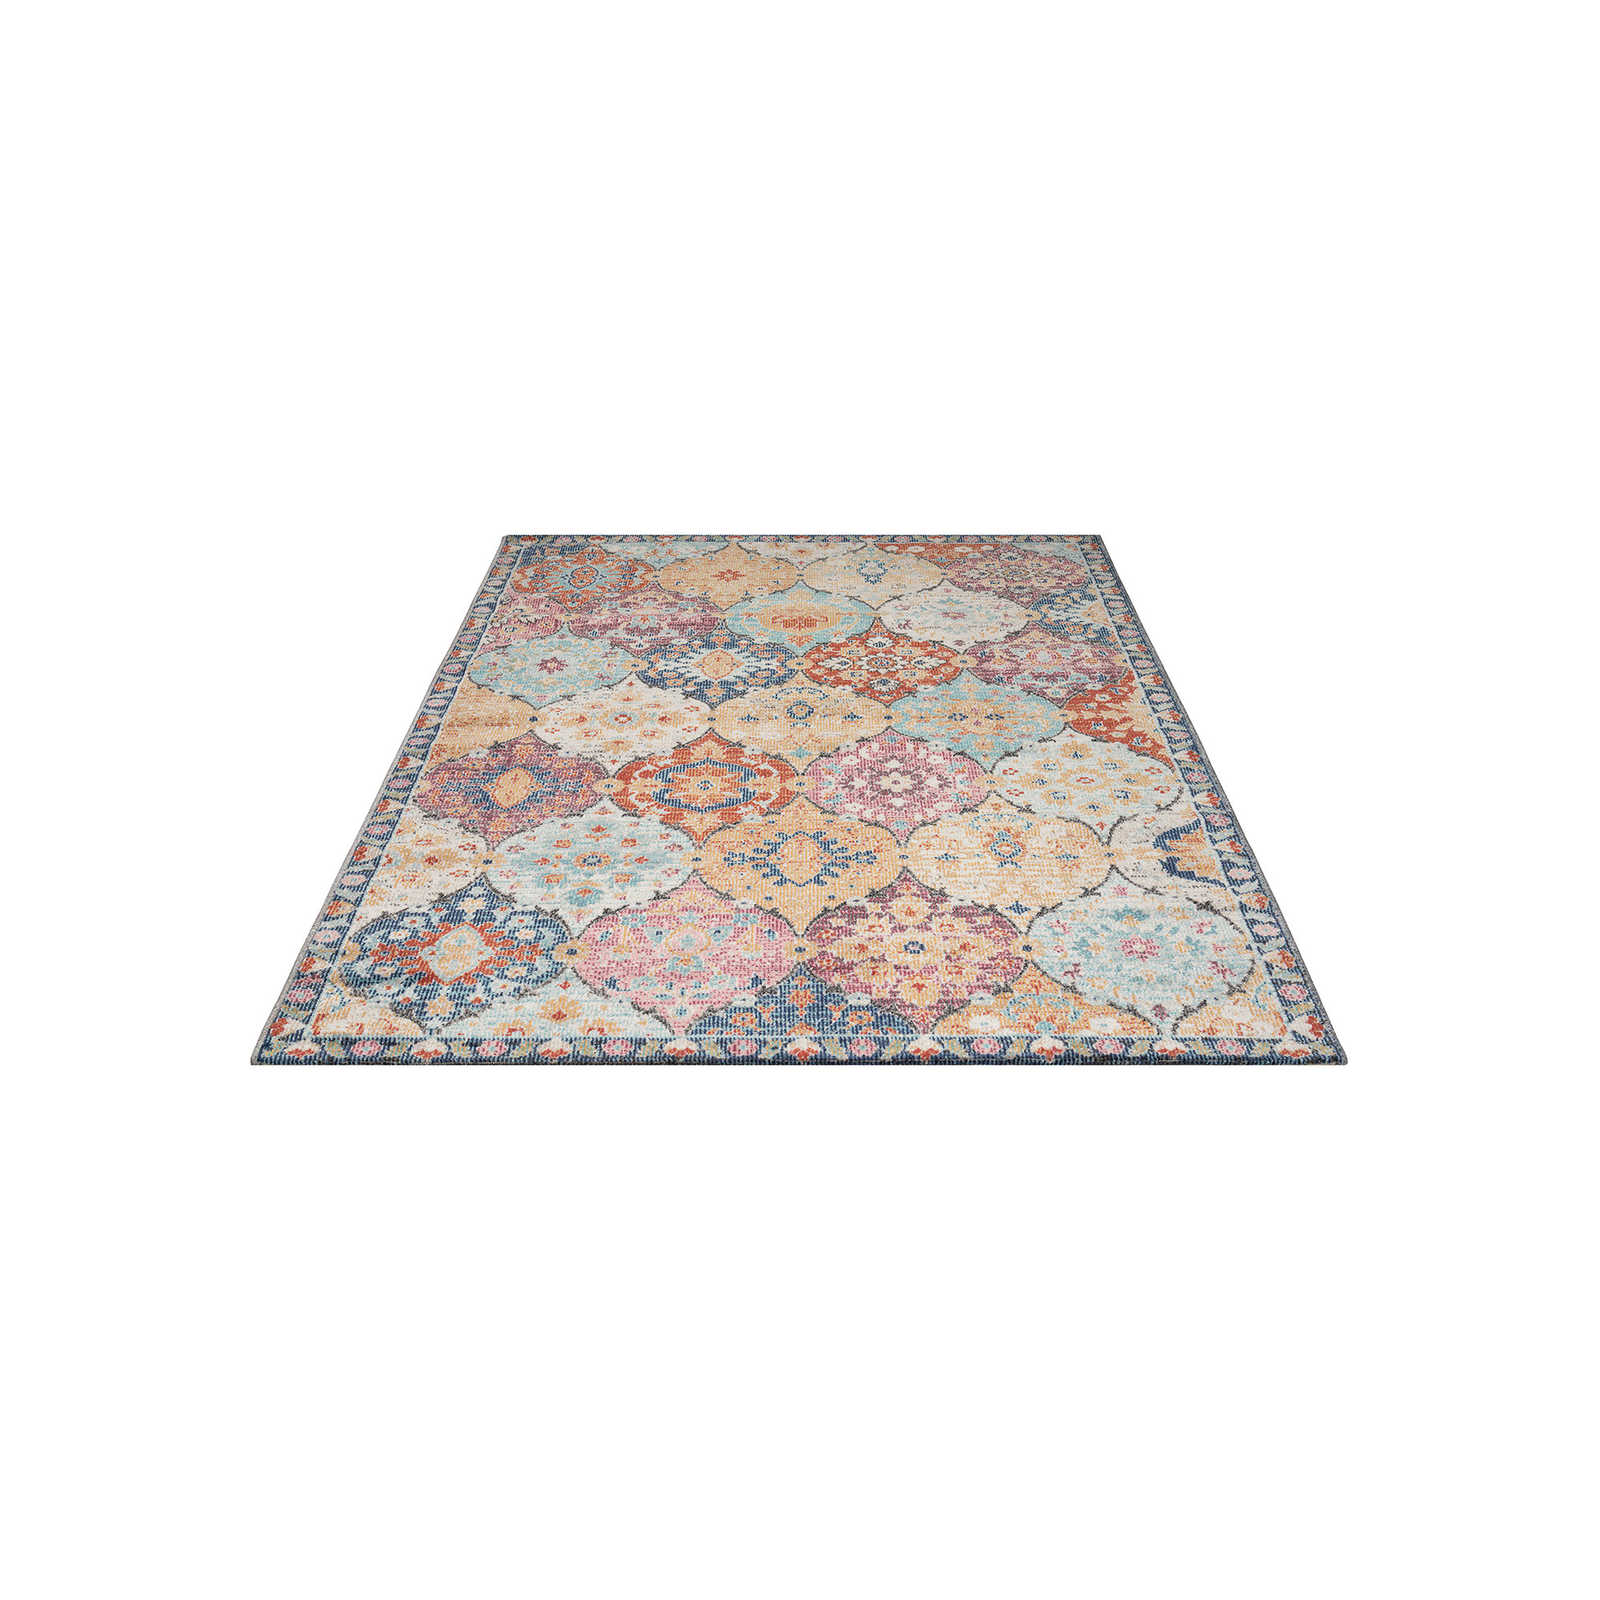 Bunter Outdoor Teppich aus Flachgewebe – 230 x 160 cm
